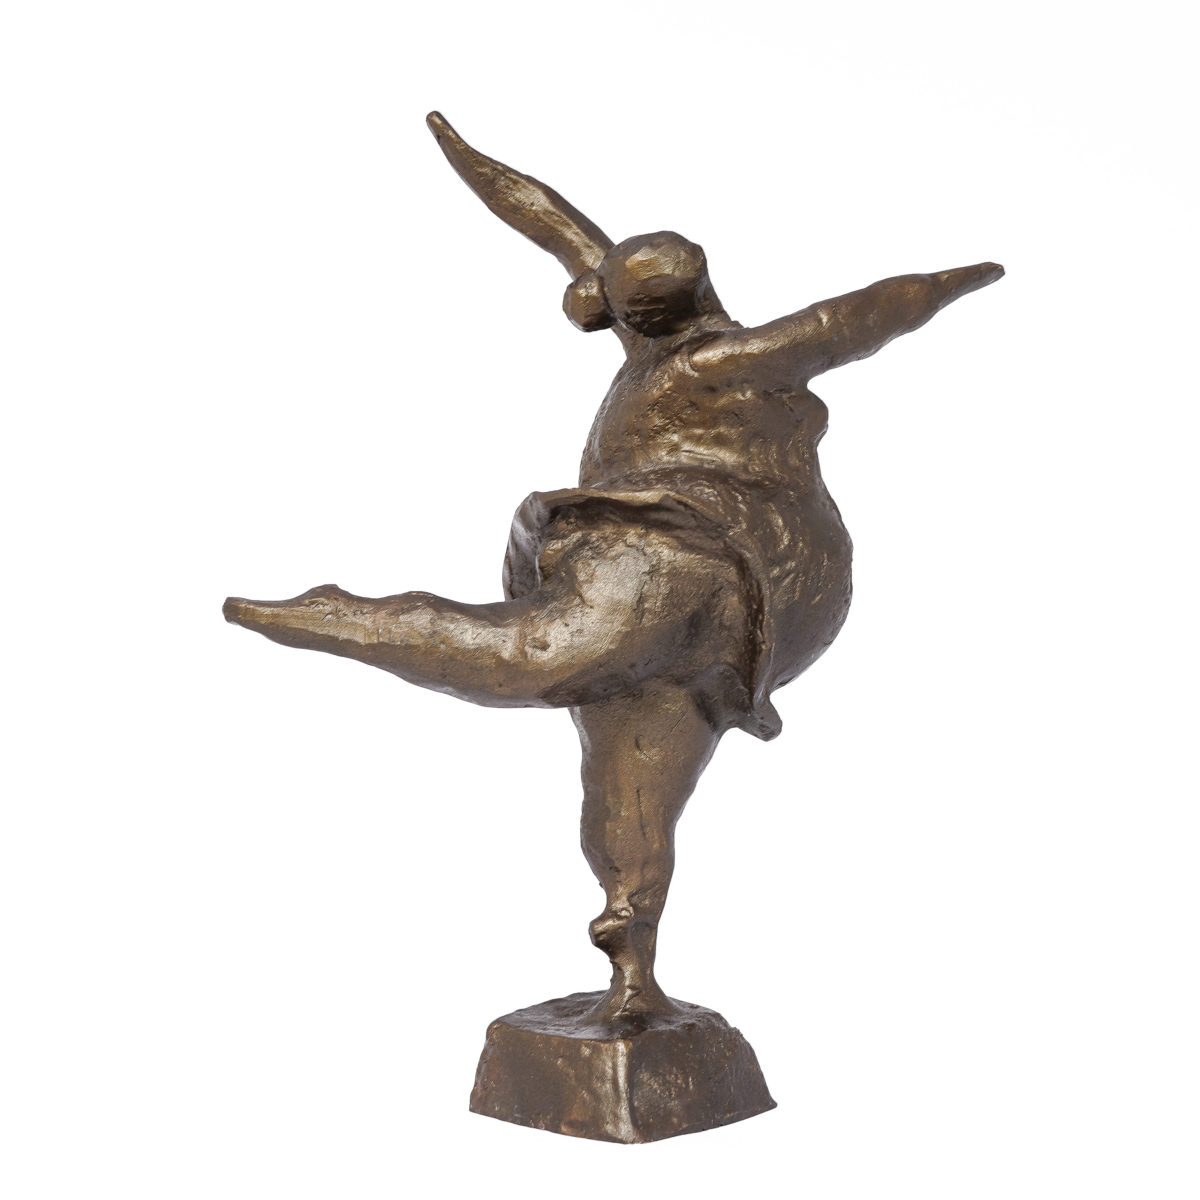 Cast figurine in bronze from thailand